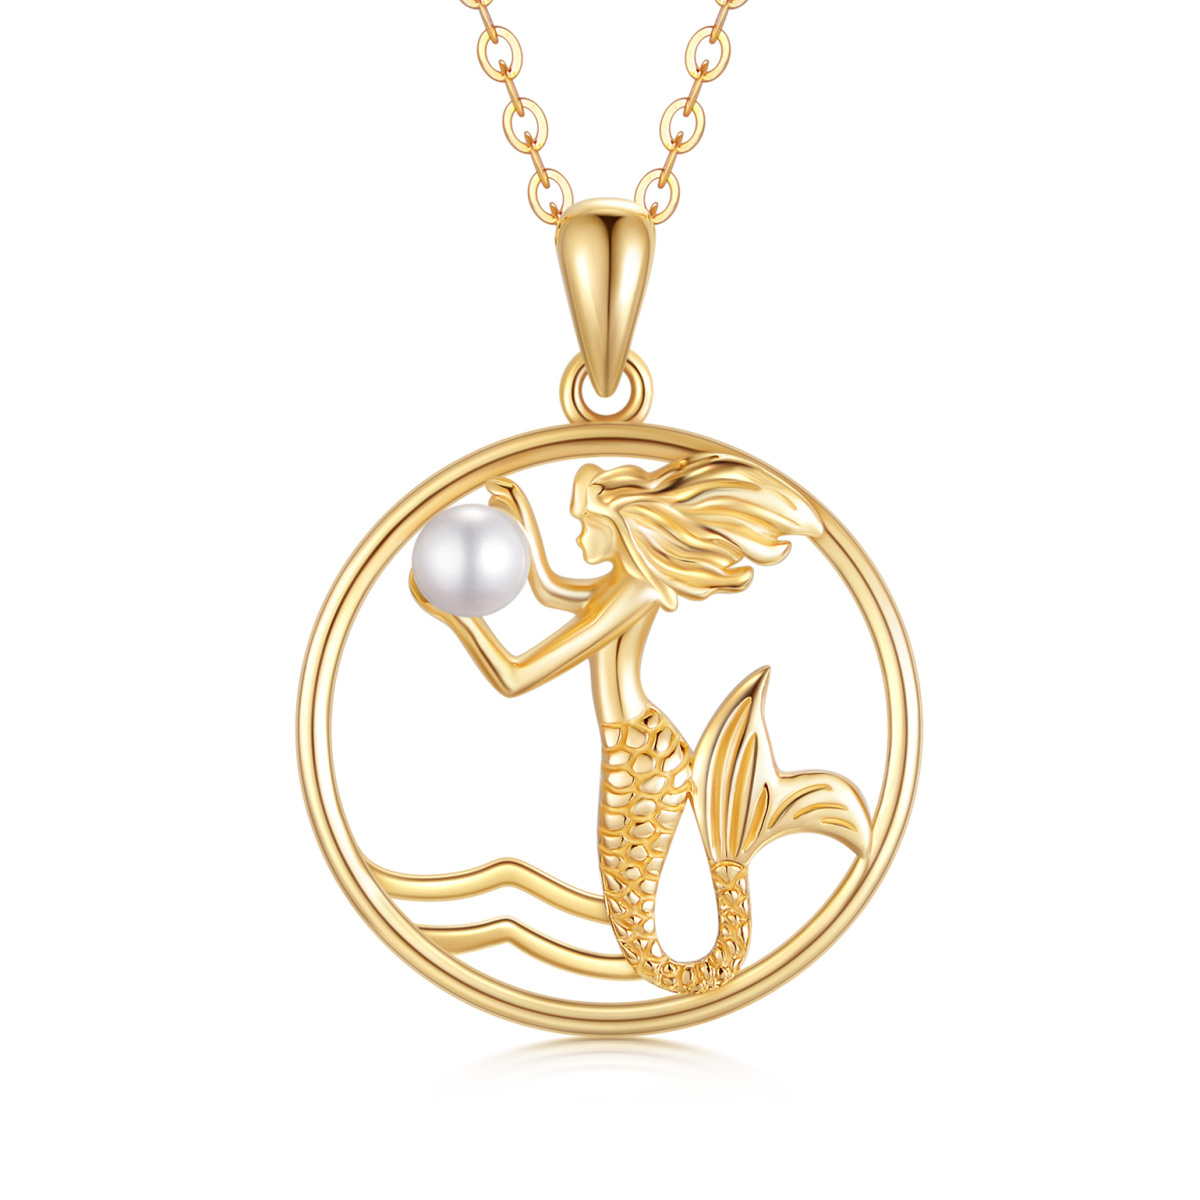 Collier en or 14K avec pendentif sirène en forme de perle circulaire-1